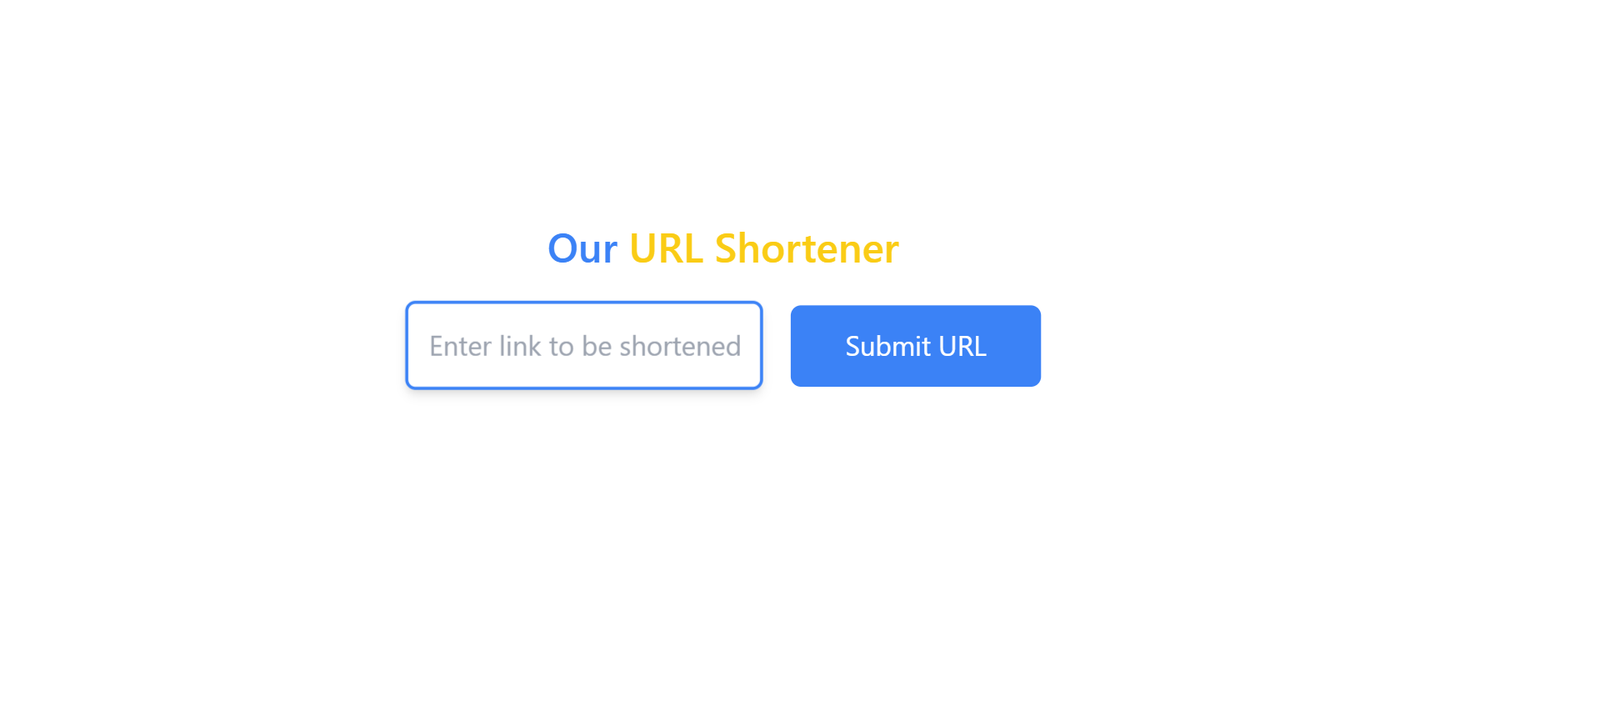 URL Shortener input field and button